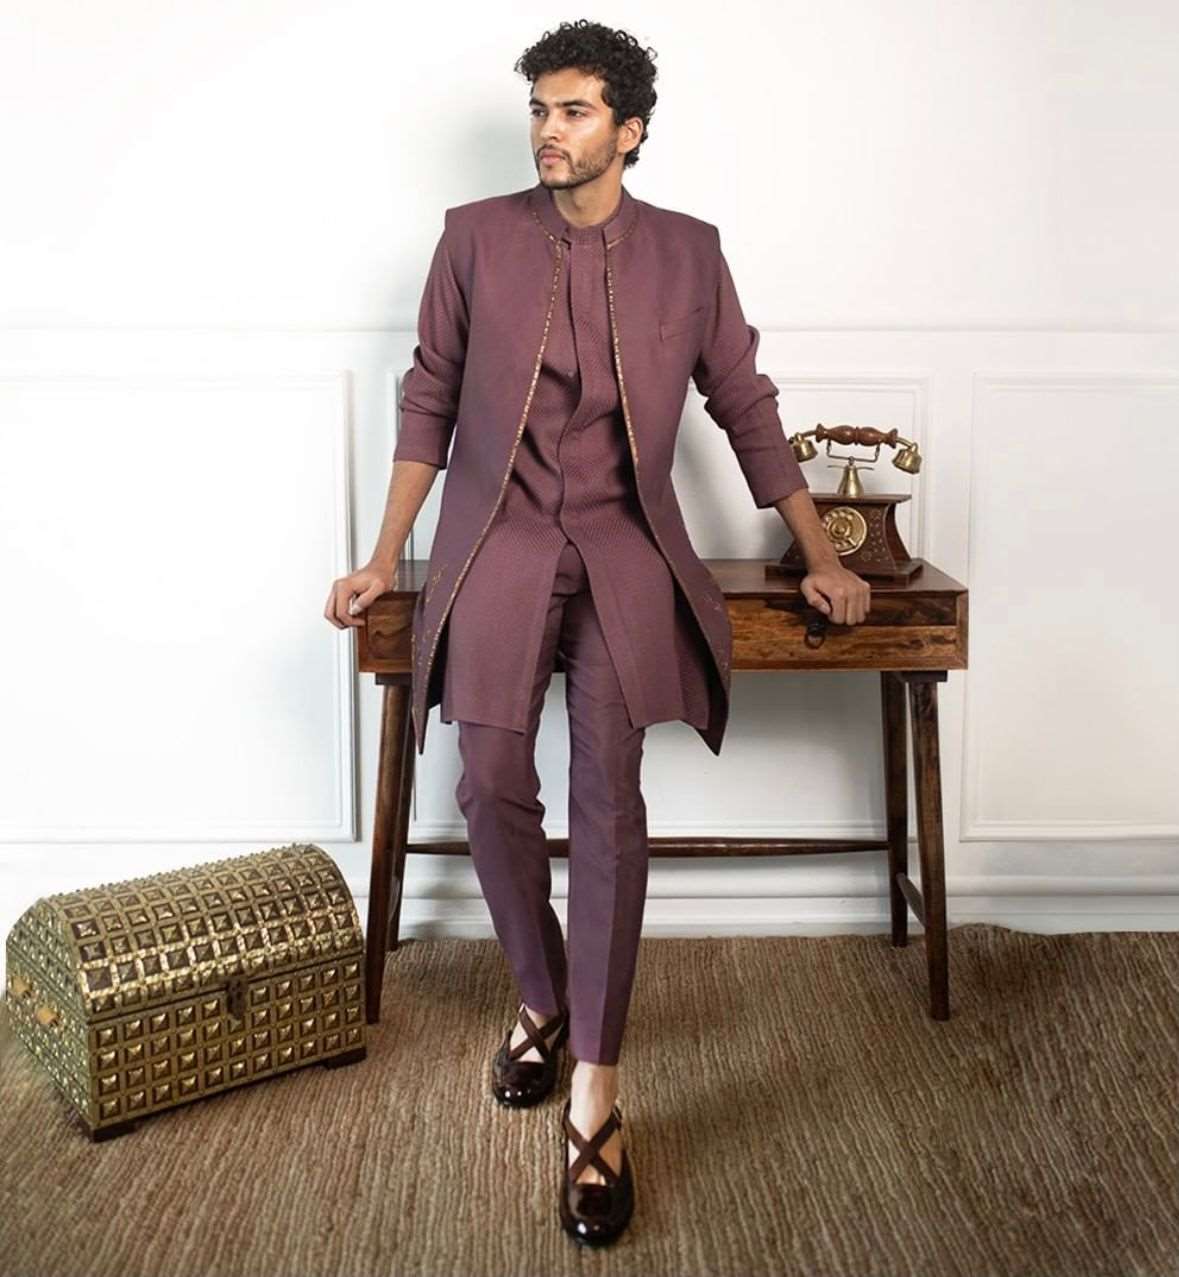 Buy Designer Criss Cross Peshawari Sandal For Men-Jackmarc.com - JACKMARC.COM